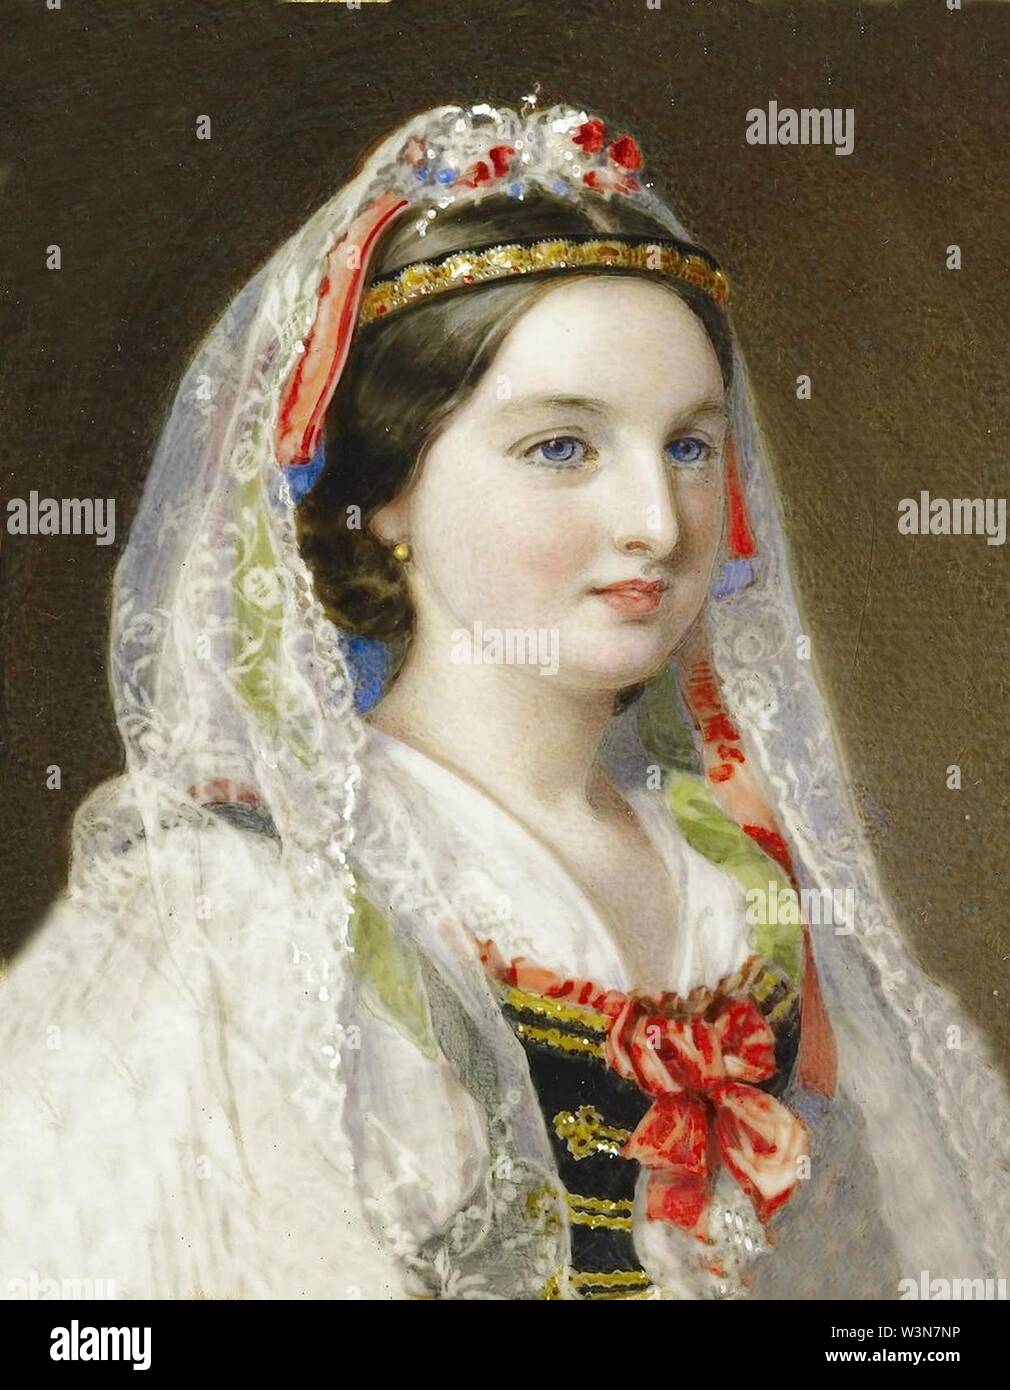 Clotilde, Countess Palatine of Hungary. Stock Photo